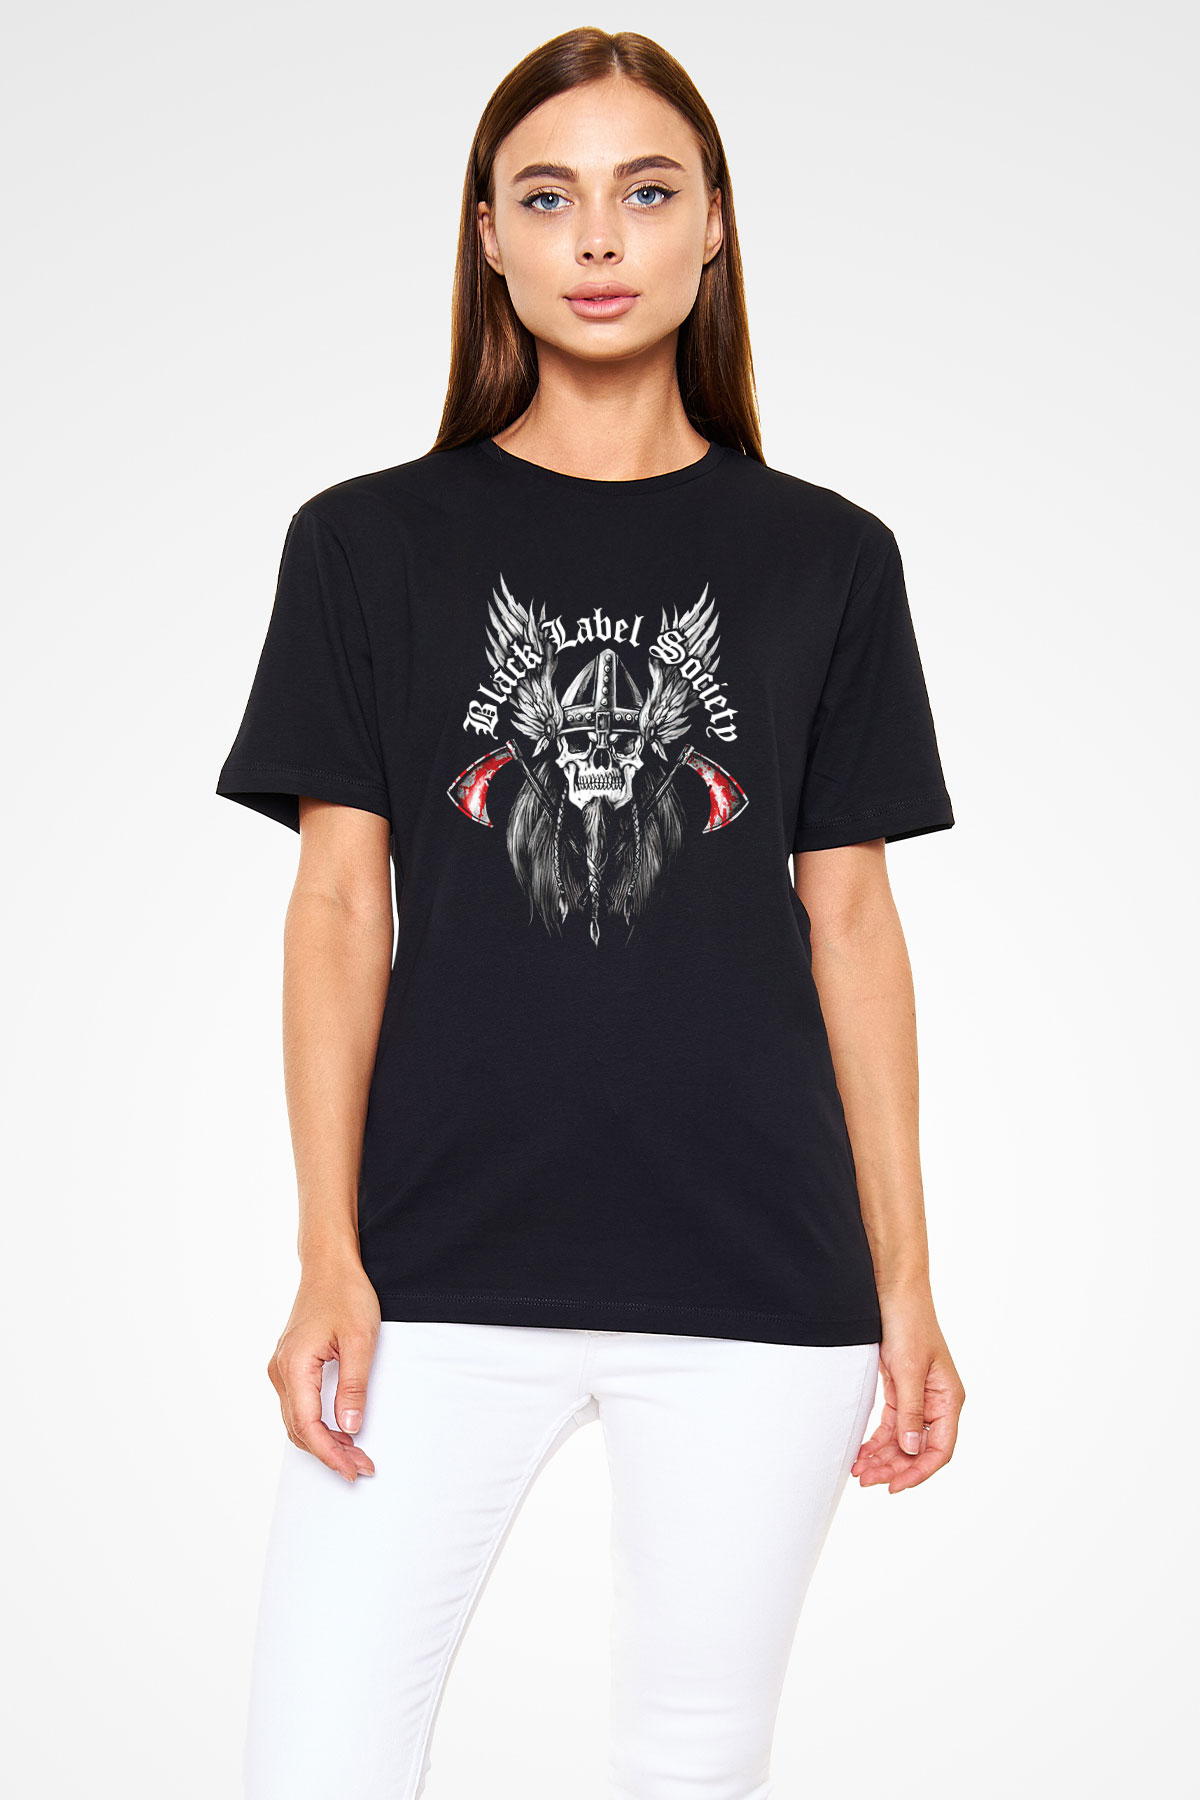 Black Label Society Black Unisex T-Shirt - Tees - Shirts